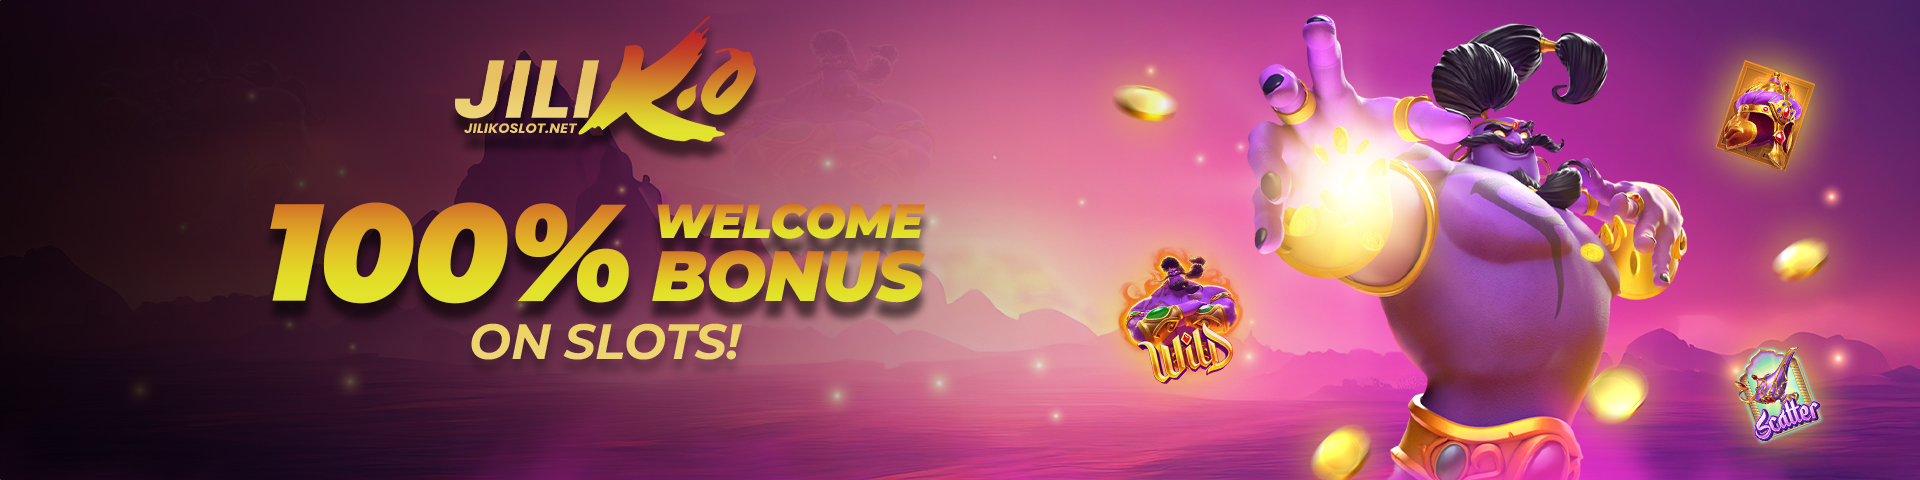 Jiliko 100% Welcome Bonus on Slots